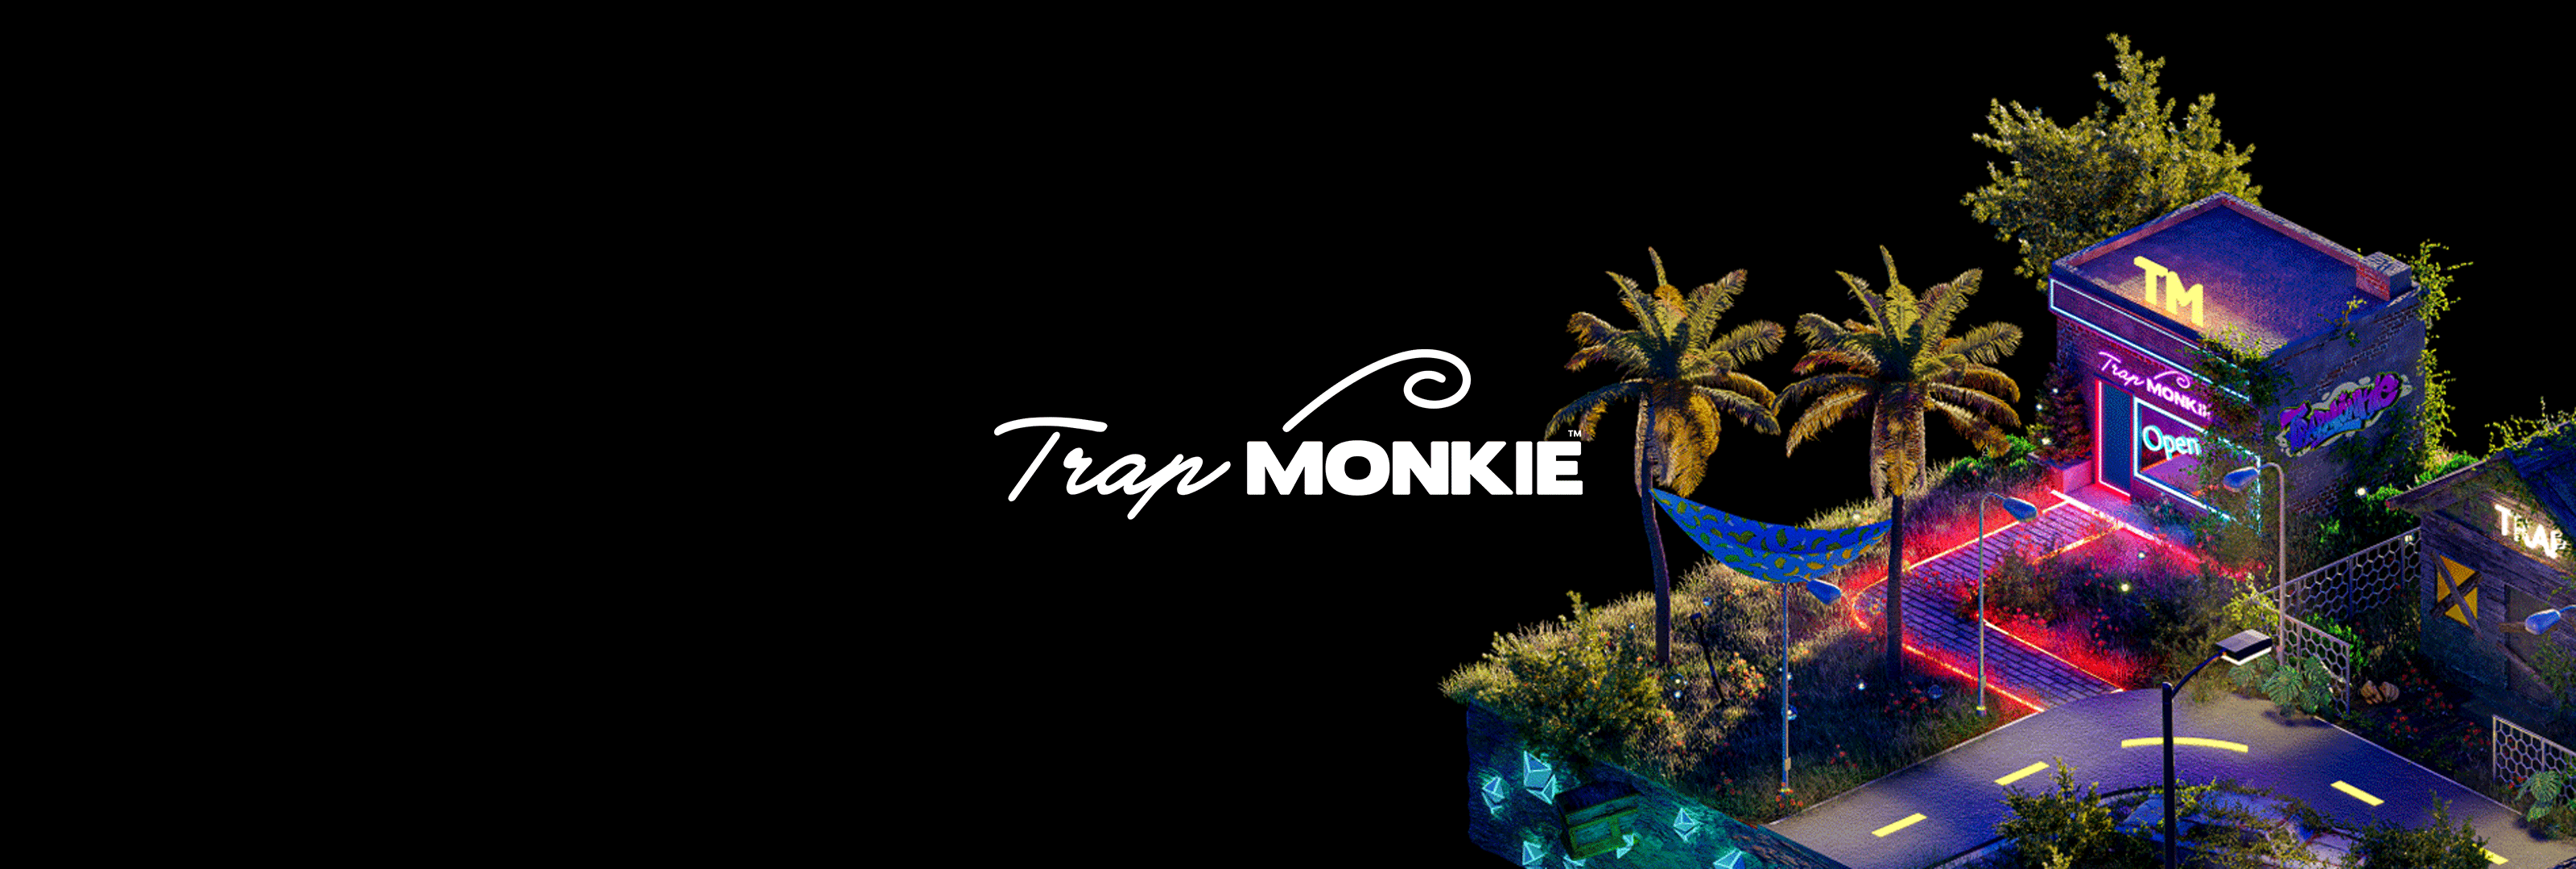 TrapMonkie_LLC 横幅